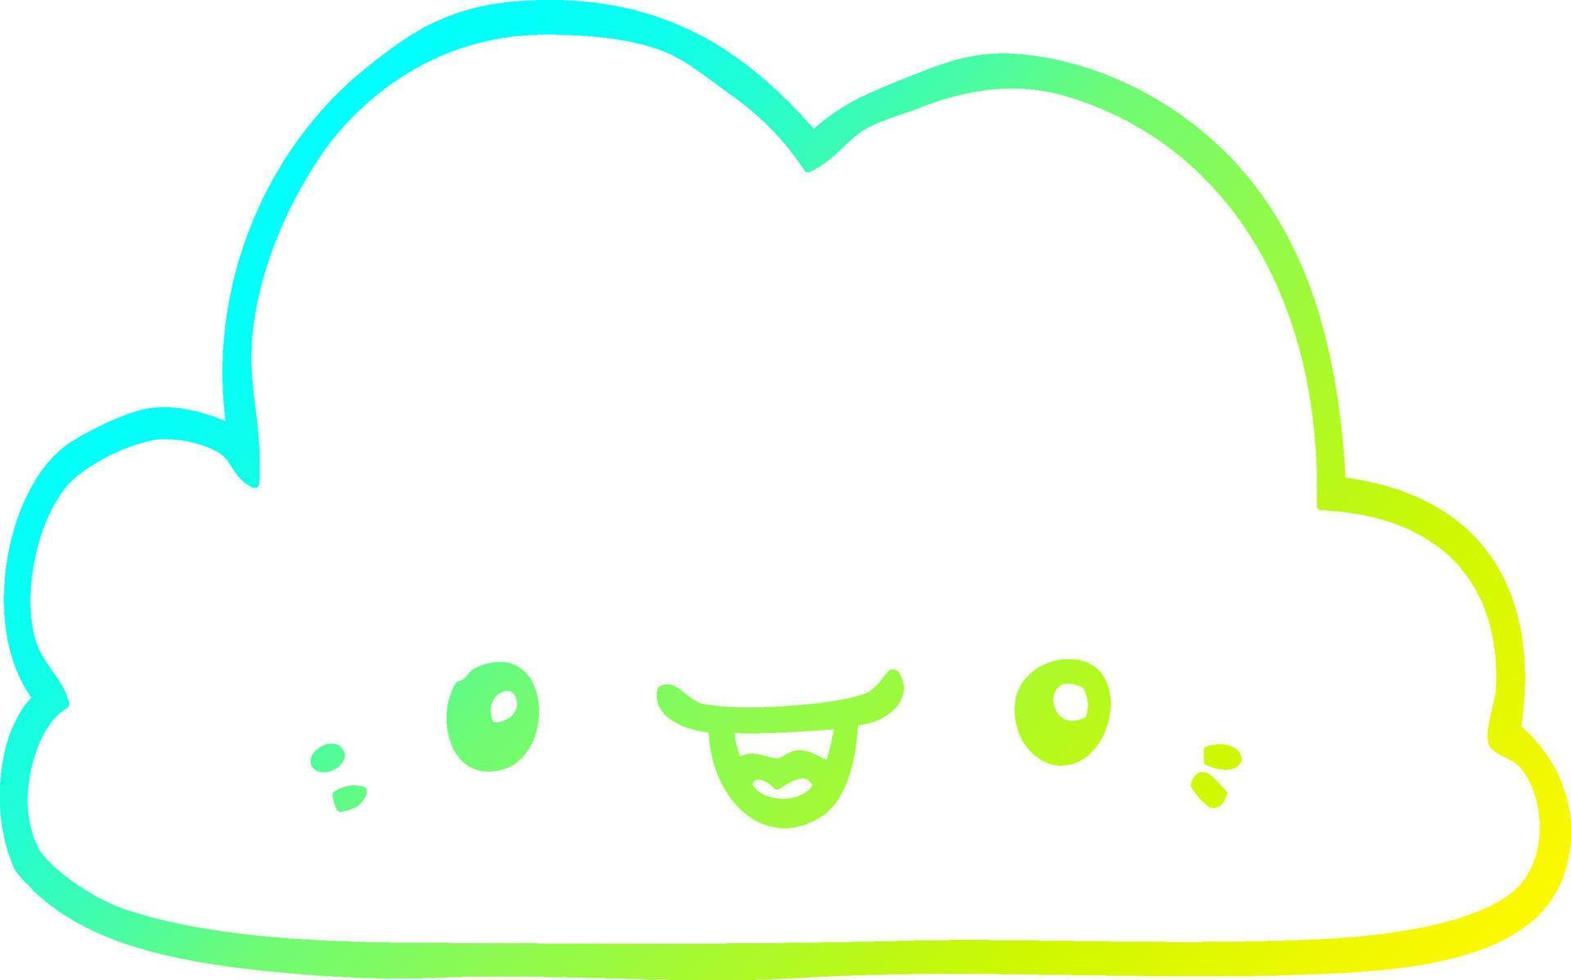 cold gradient line drawing cute cartoon cloud vector